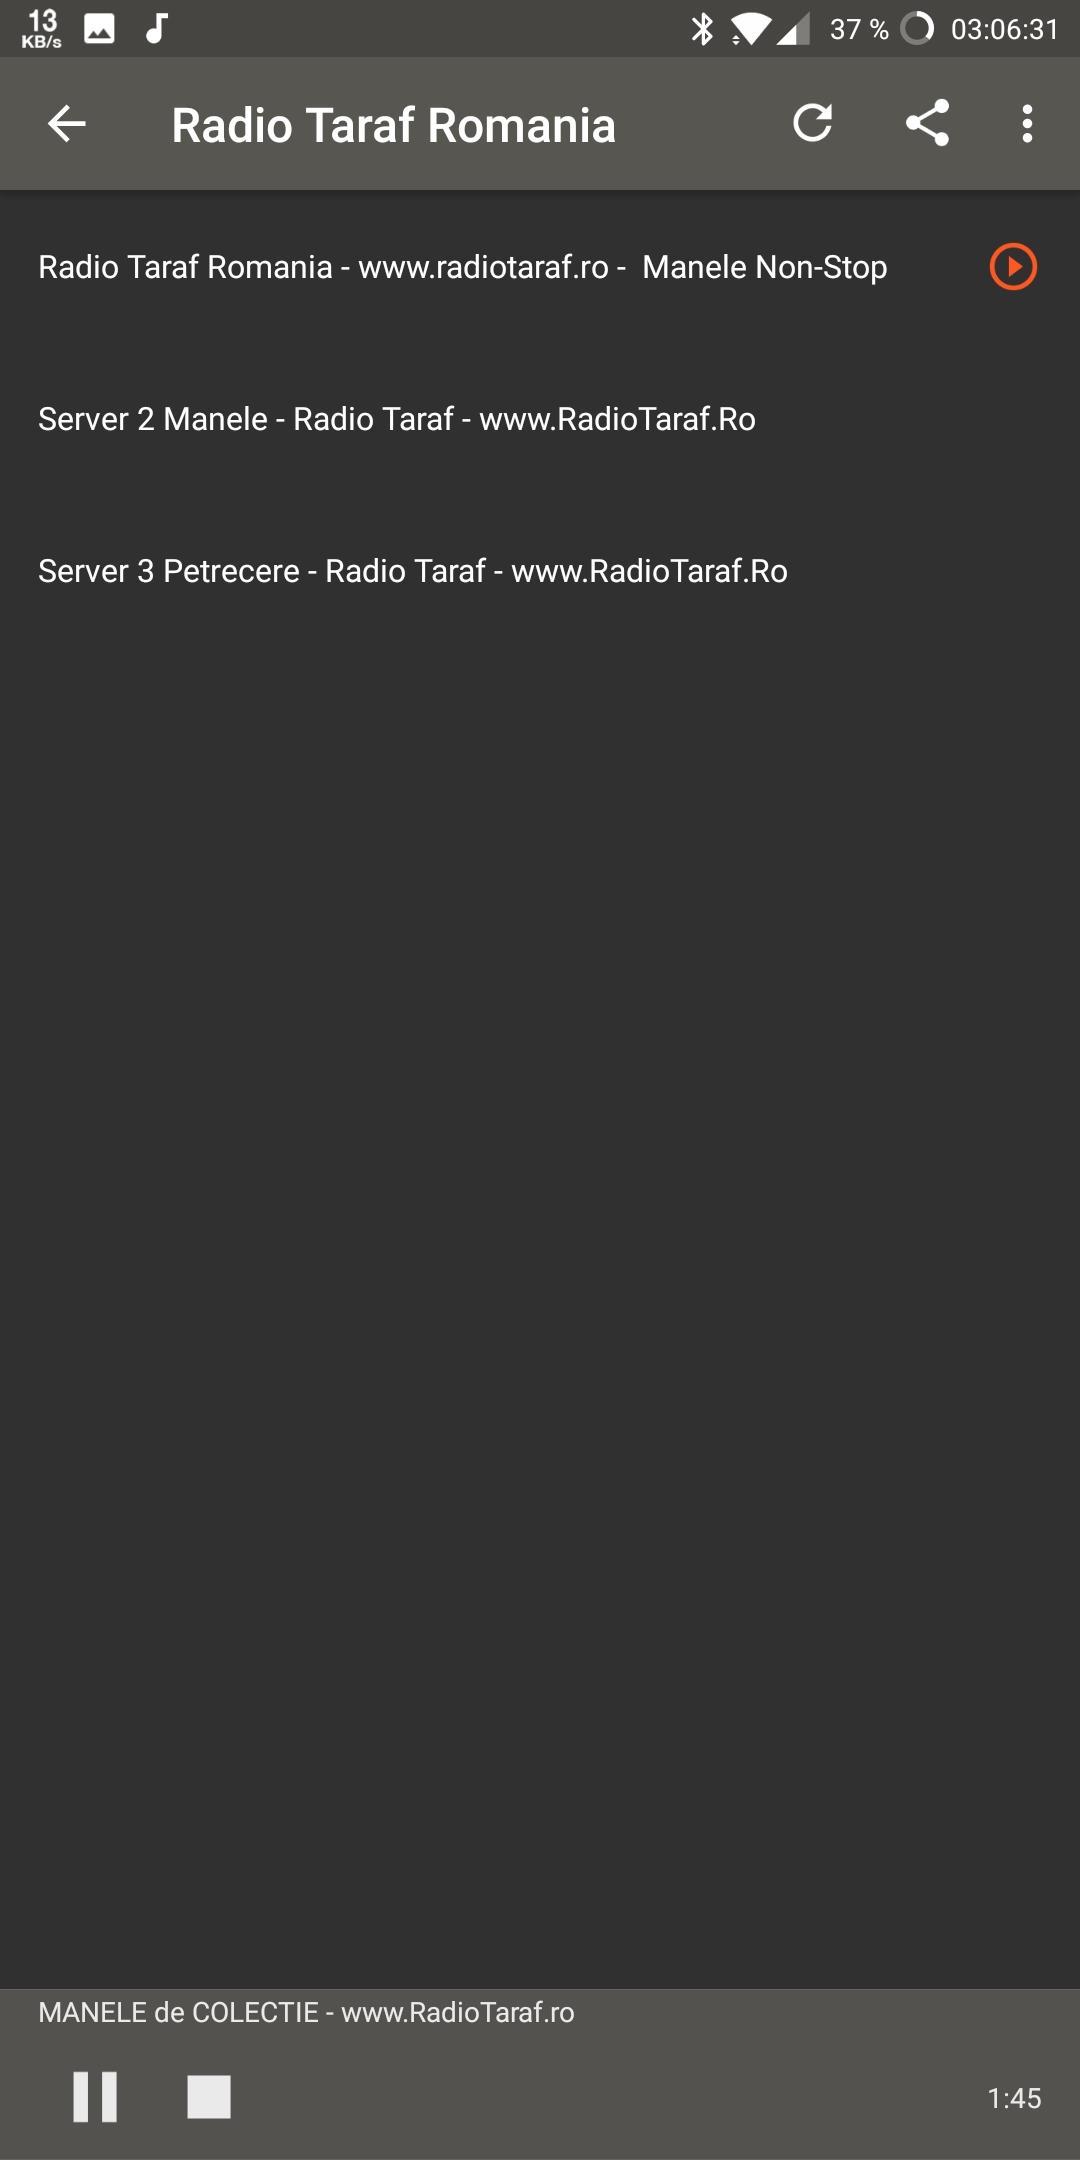 Radio Manele cu Dedicatii for Android - APK Download